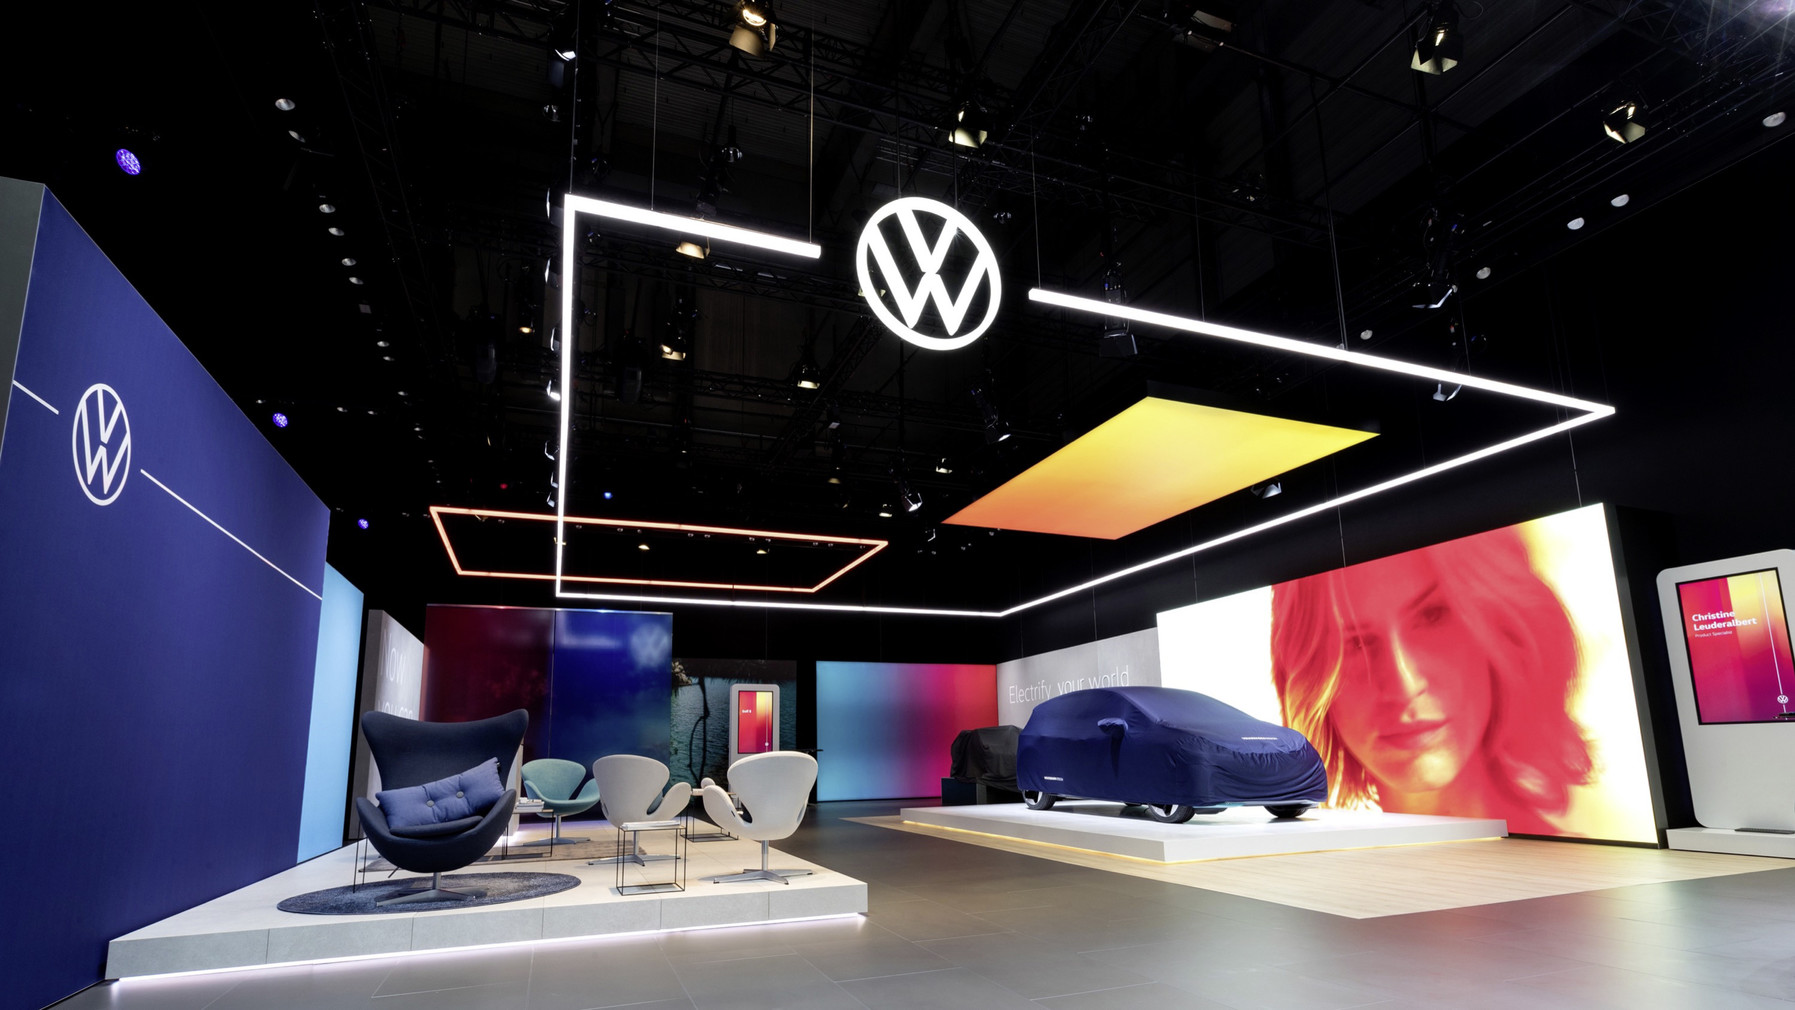 New VW brand presence at the IAA in Frankfurt in 2019